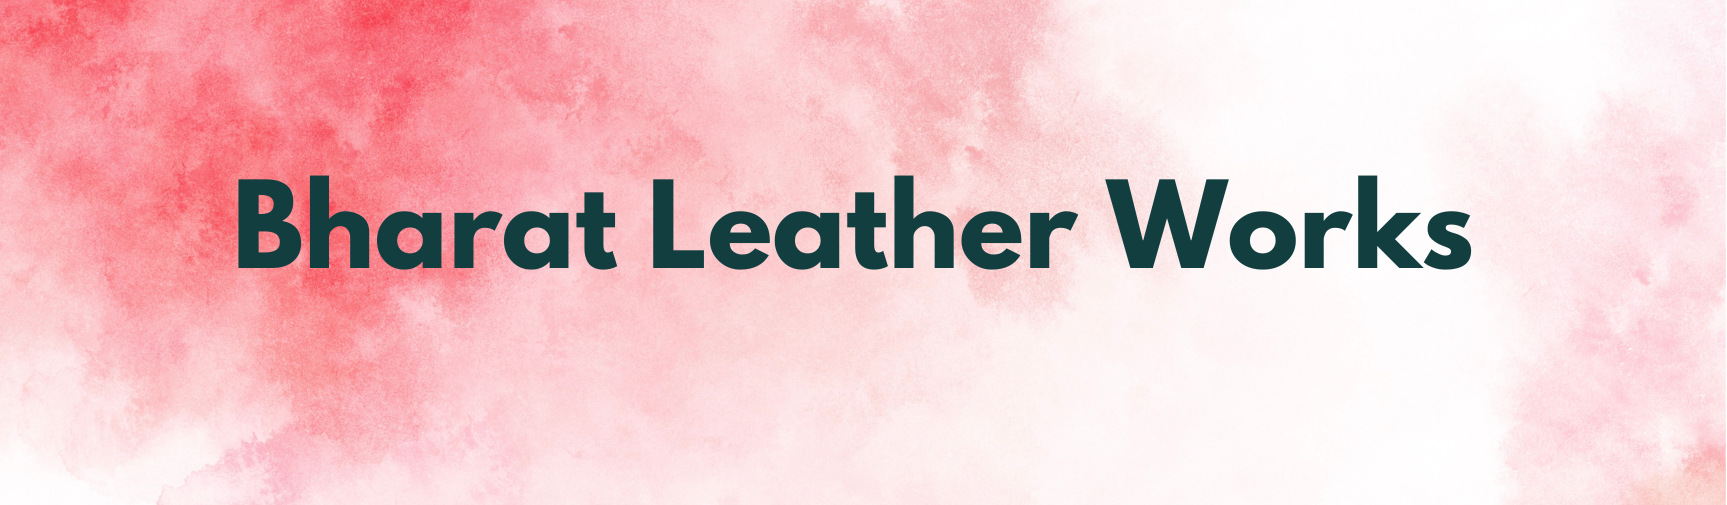 Bharat Leather Works.